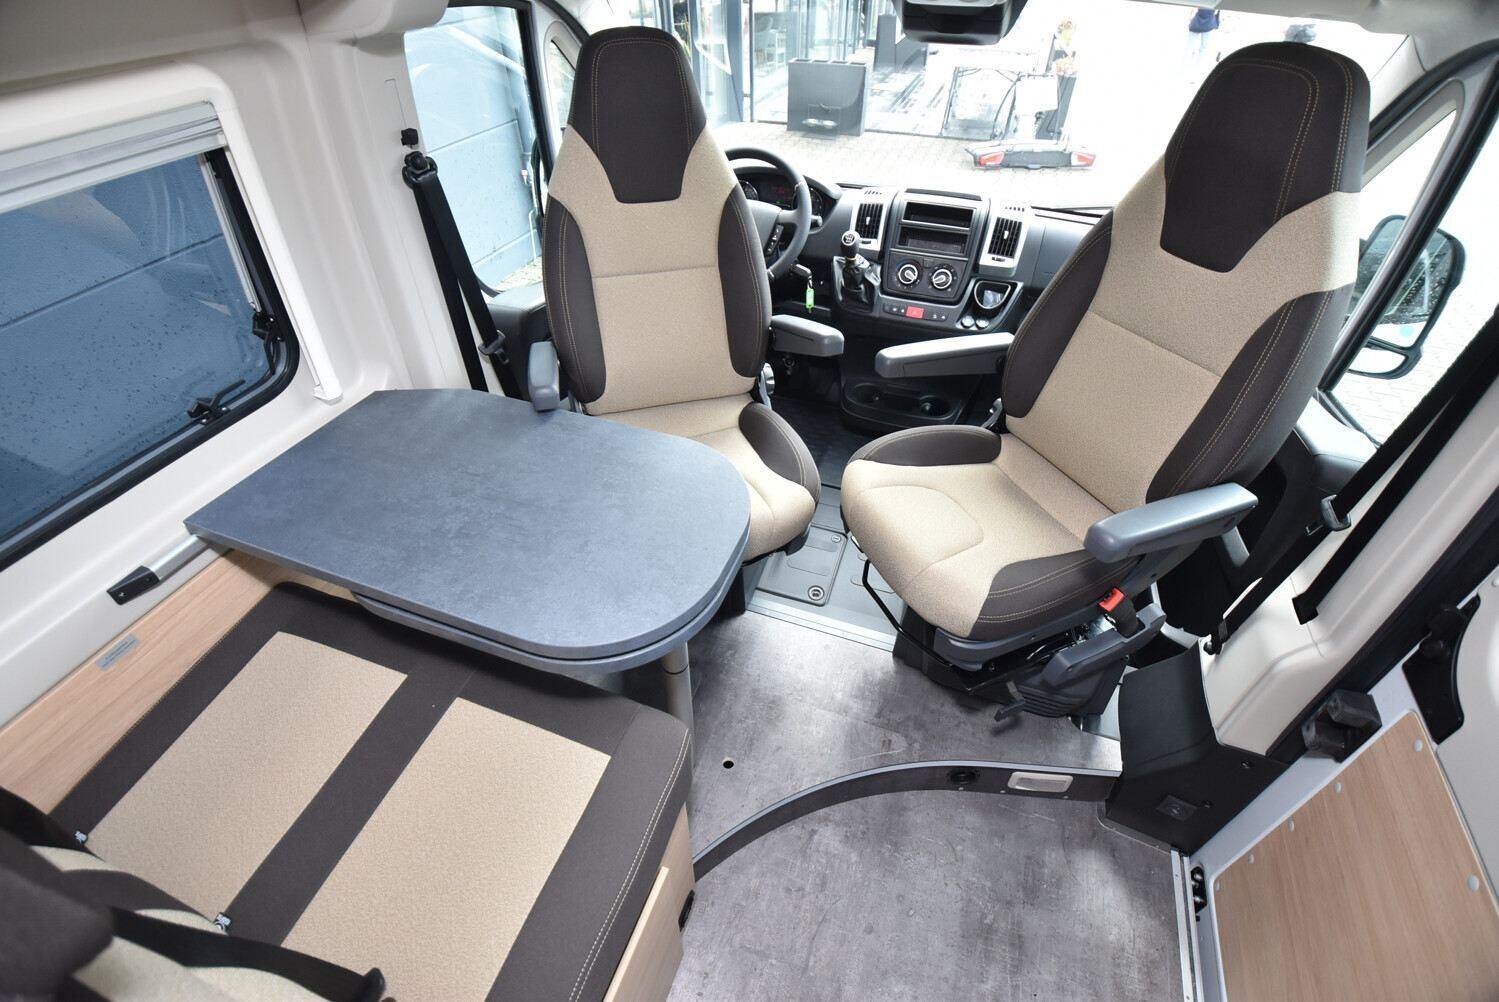 Wohnmobil 🚐 Roadcar R 600 Citroen 140 PS kaufen